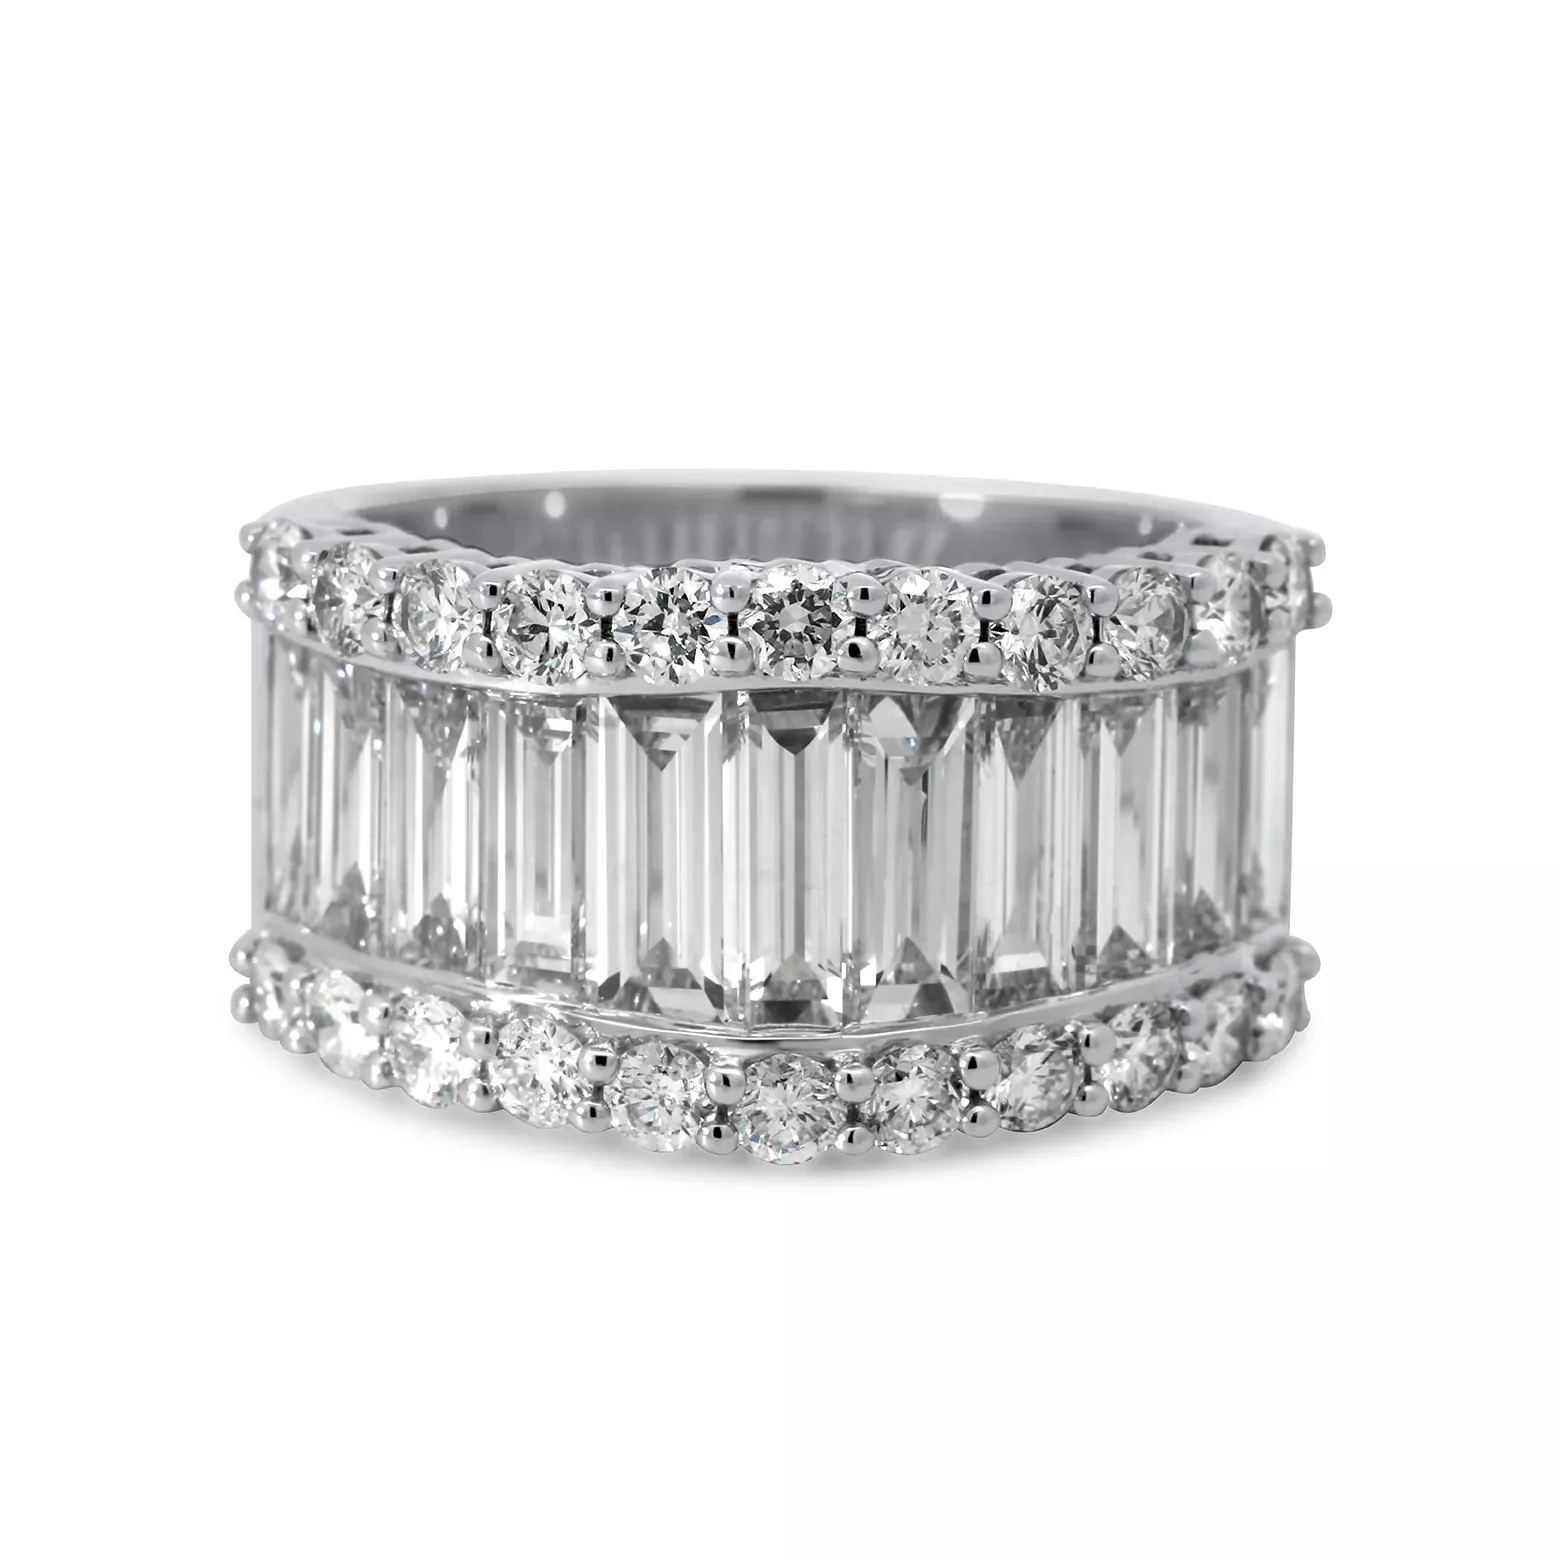 ronan campbell baguette diamond engagement ring designyard dublin ireland